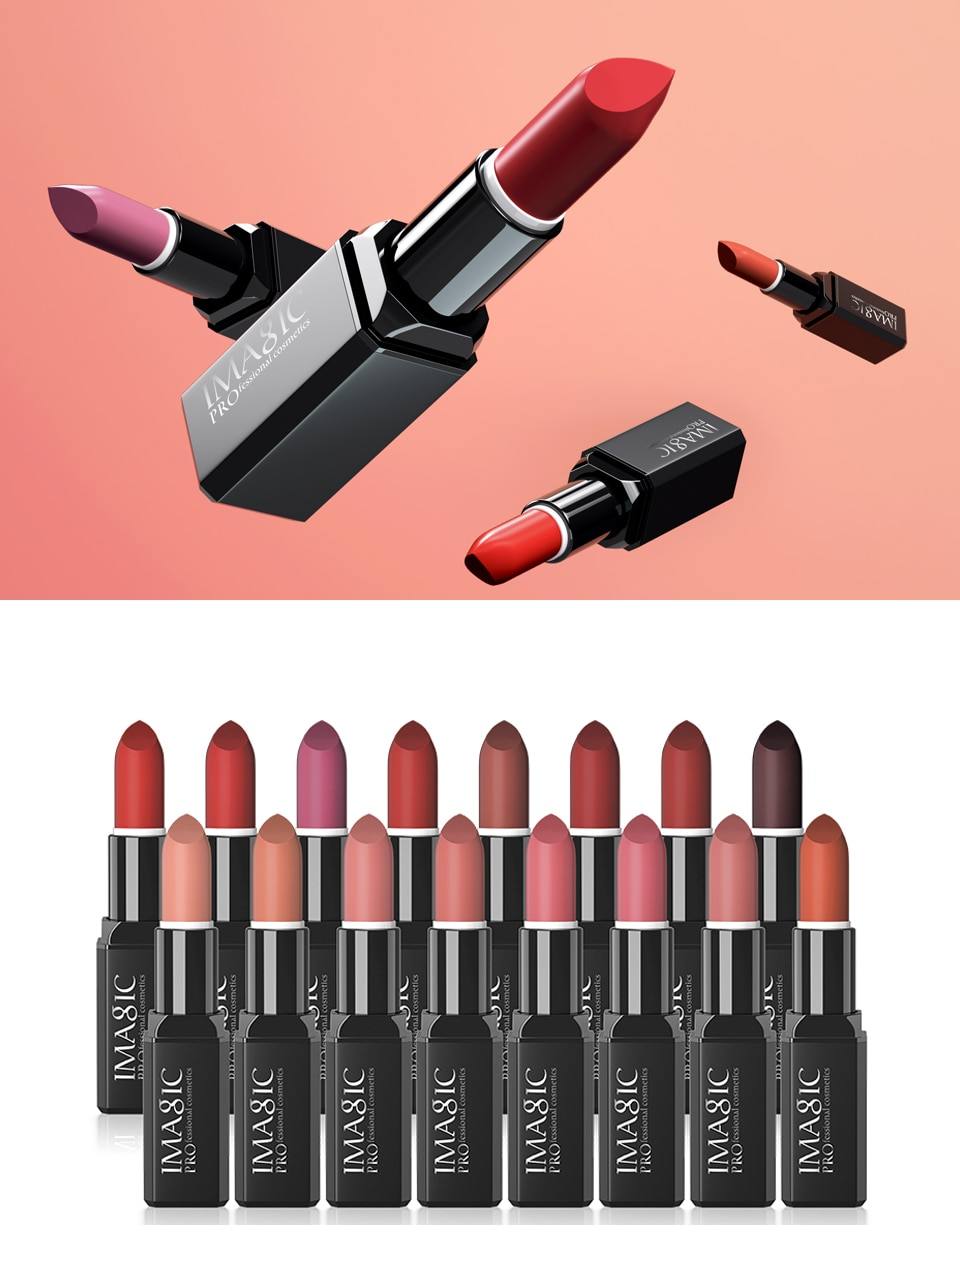 IMAGIC Waterproof Glossy Lipstick Smooth Moisturizer Pigment Woman Lipsticks Pintalabios Natural 16 Colors Batom Lip Makeup